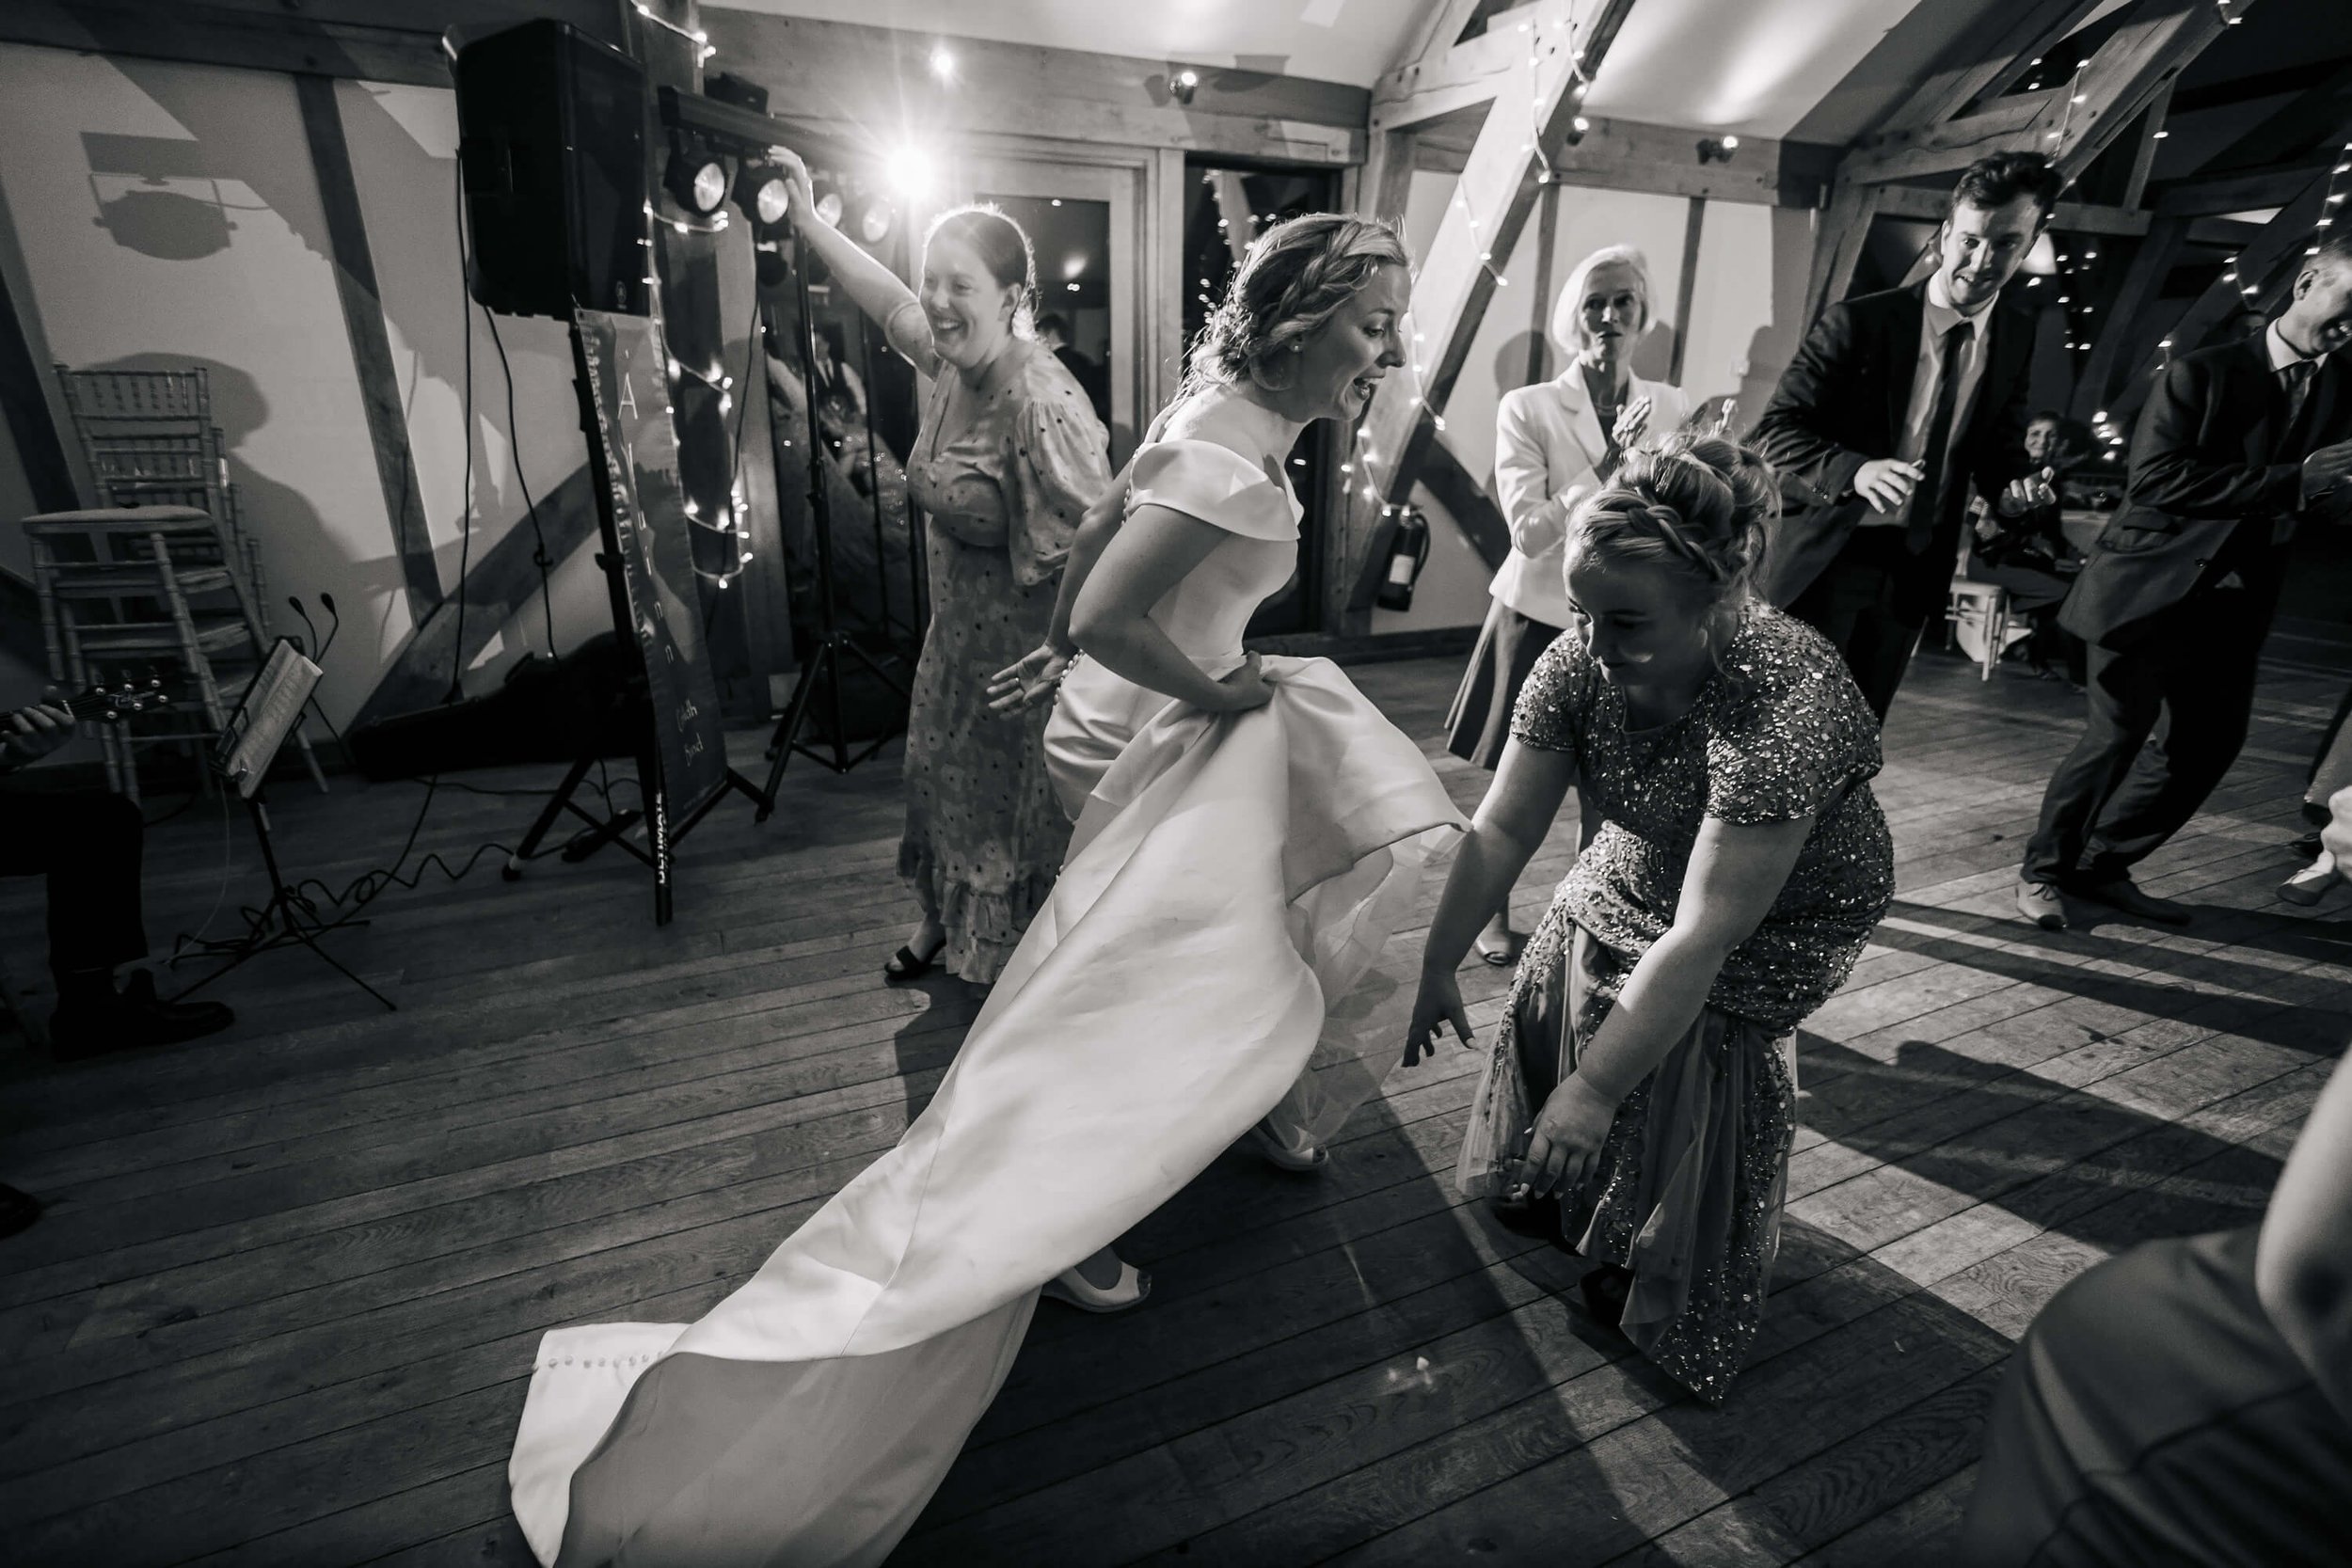 Ceilidh dancing at a wedding in York